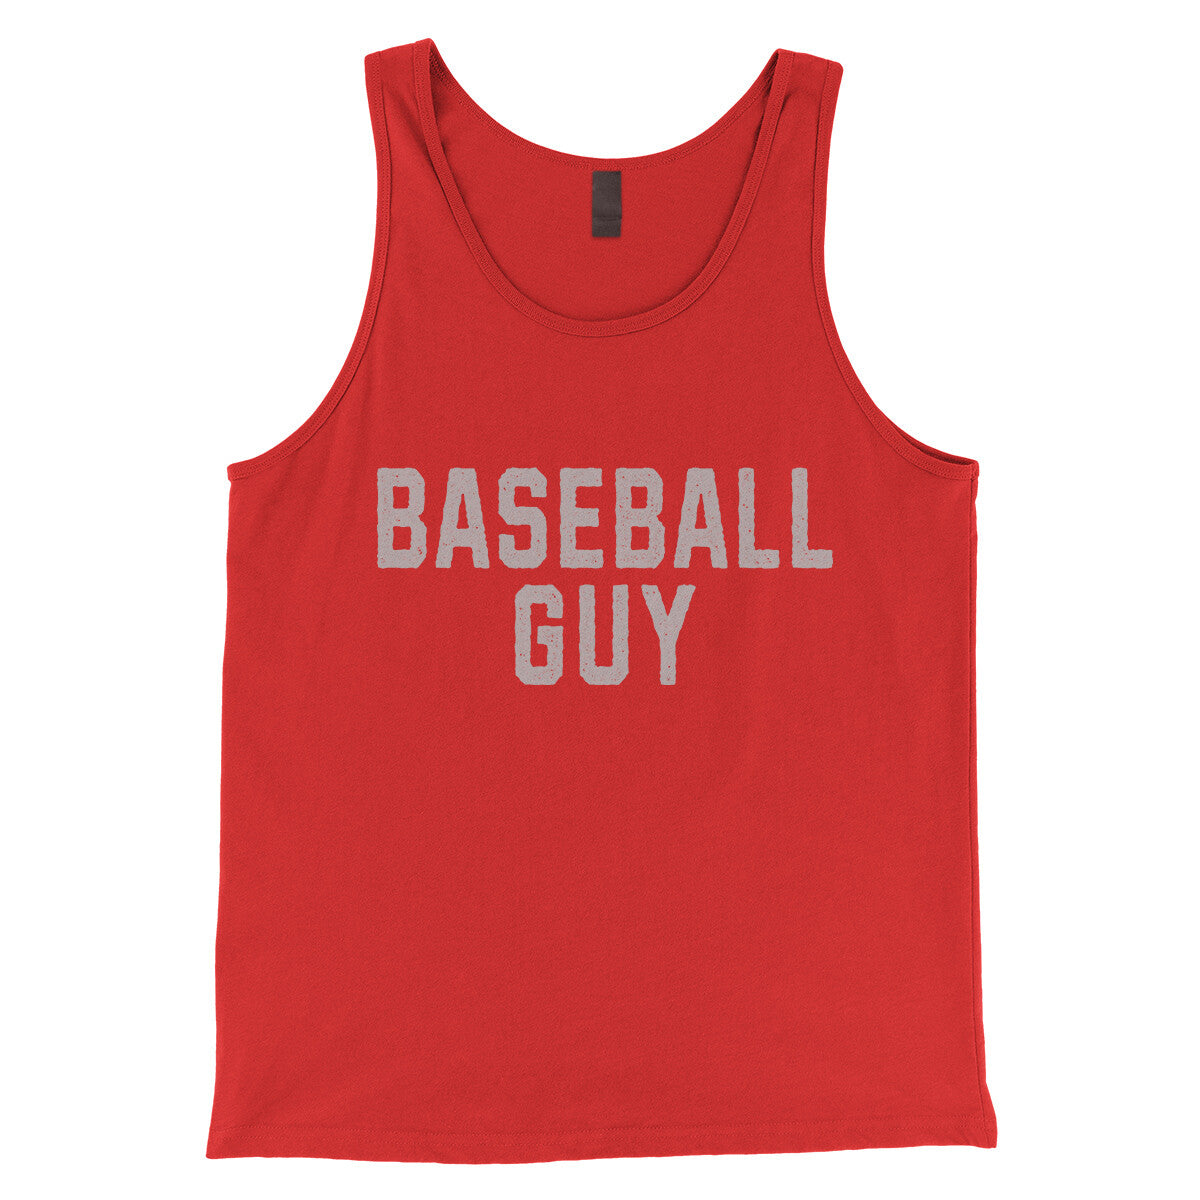 Baseball Guy in Red Color